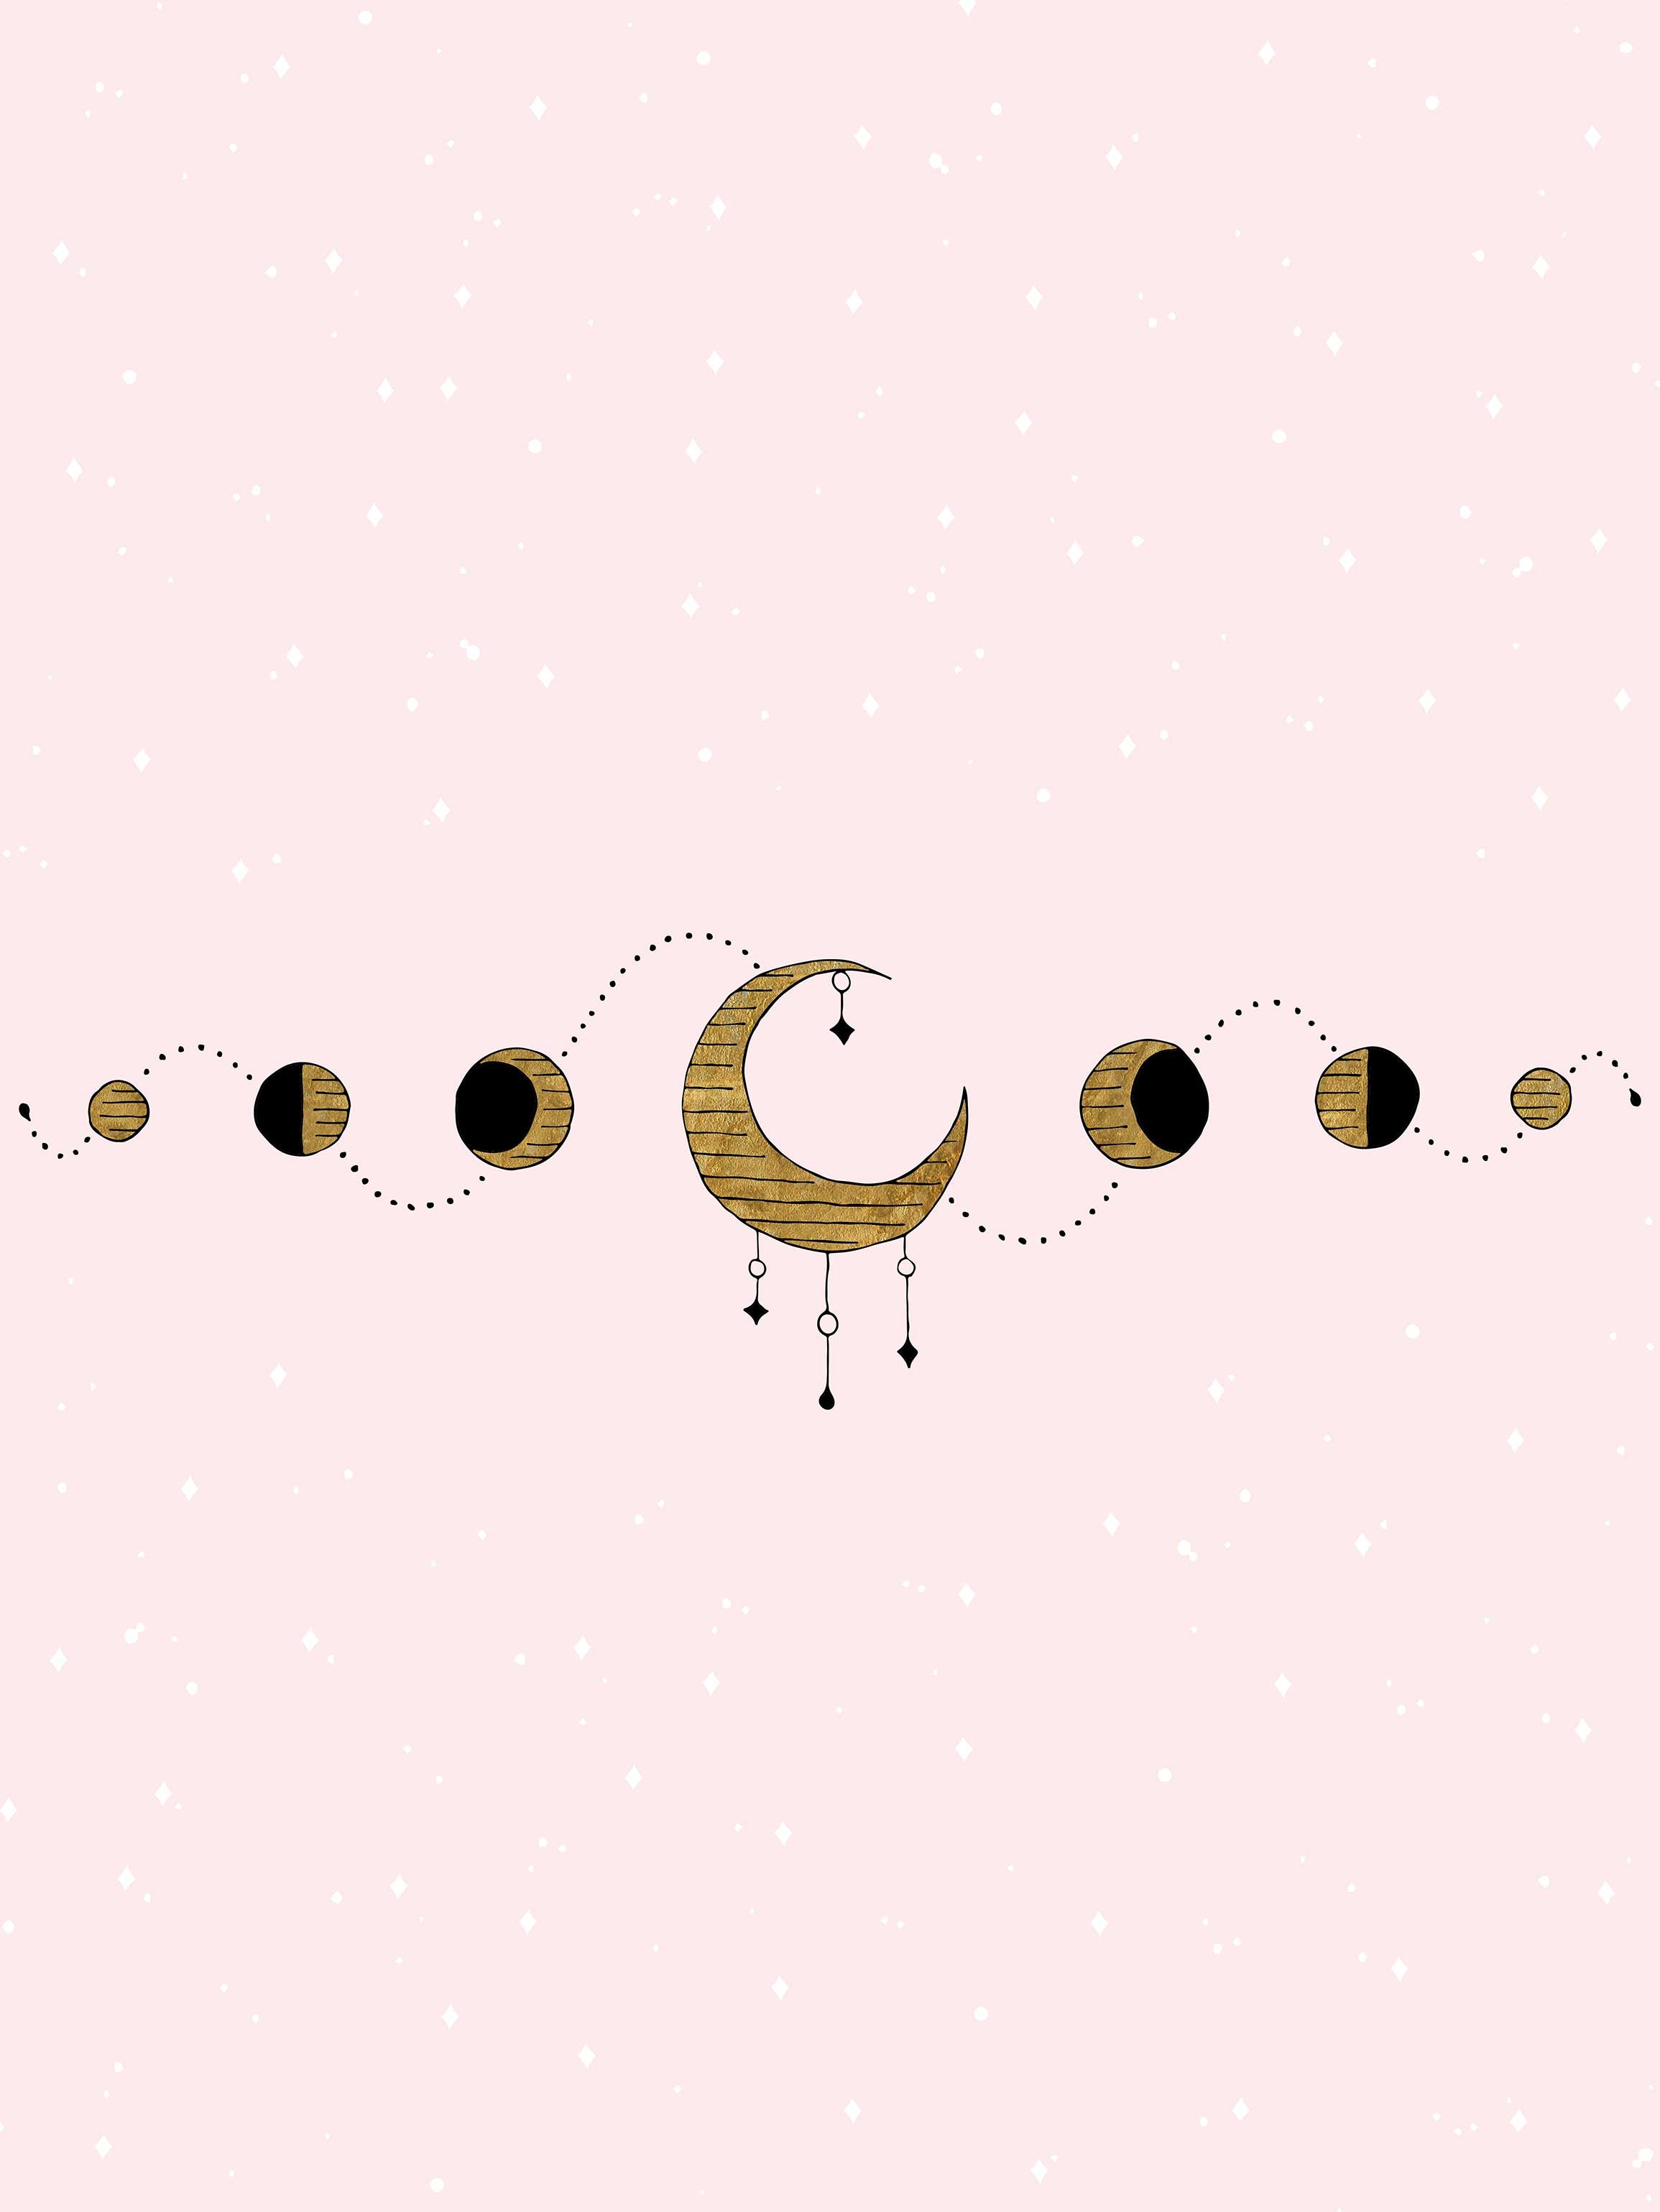 moon phases drawing tumblr